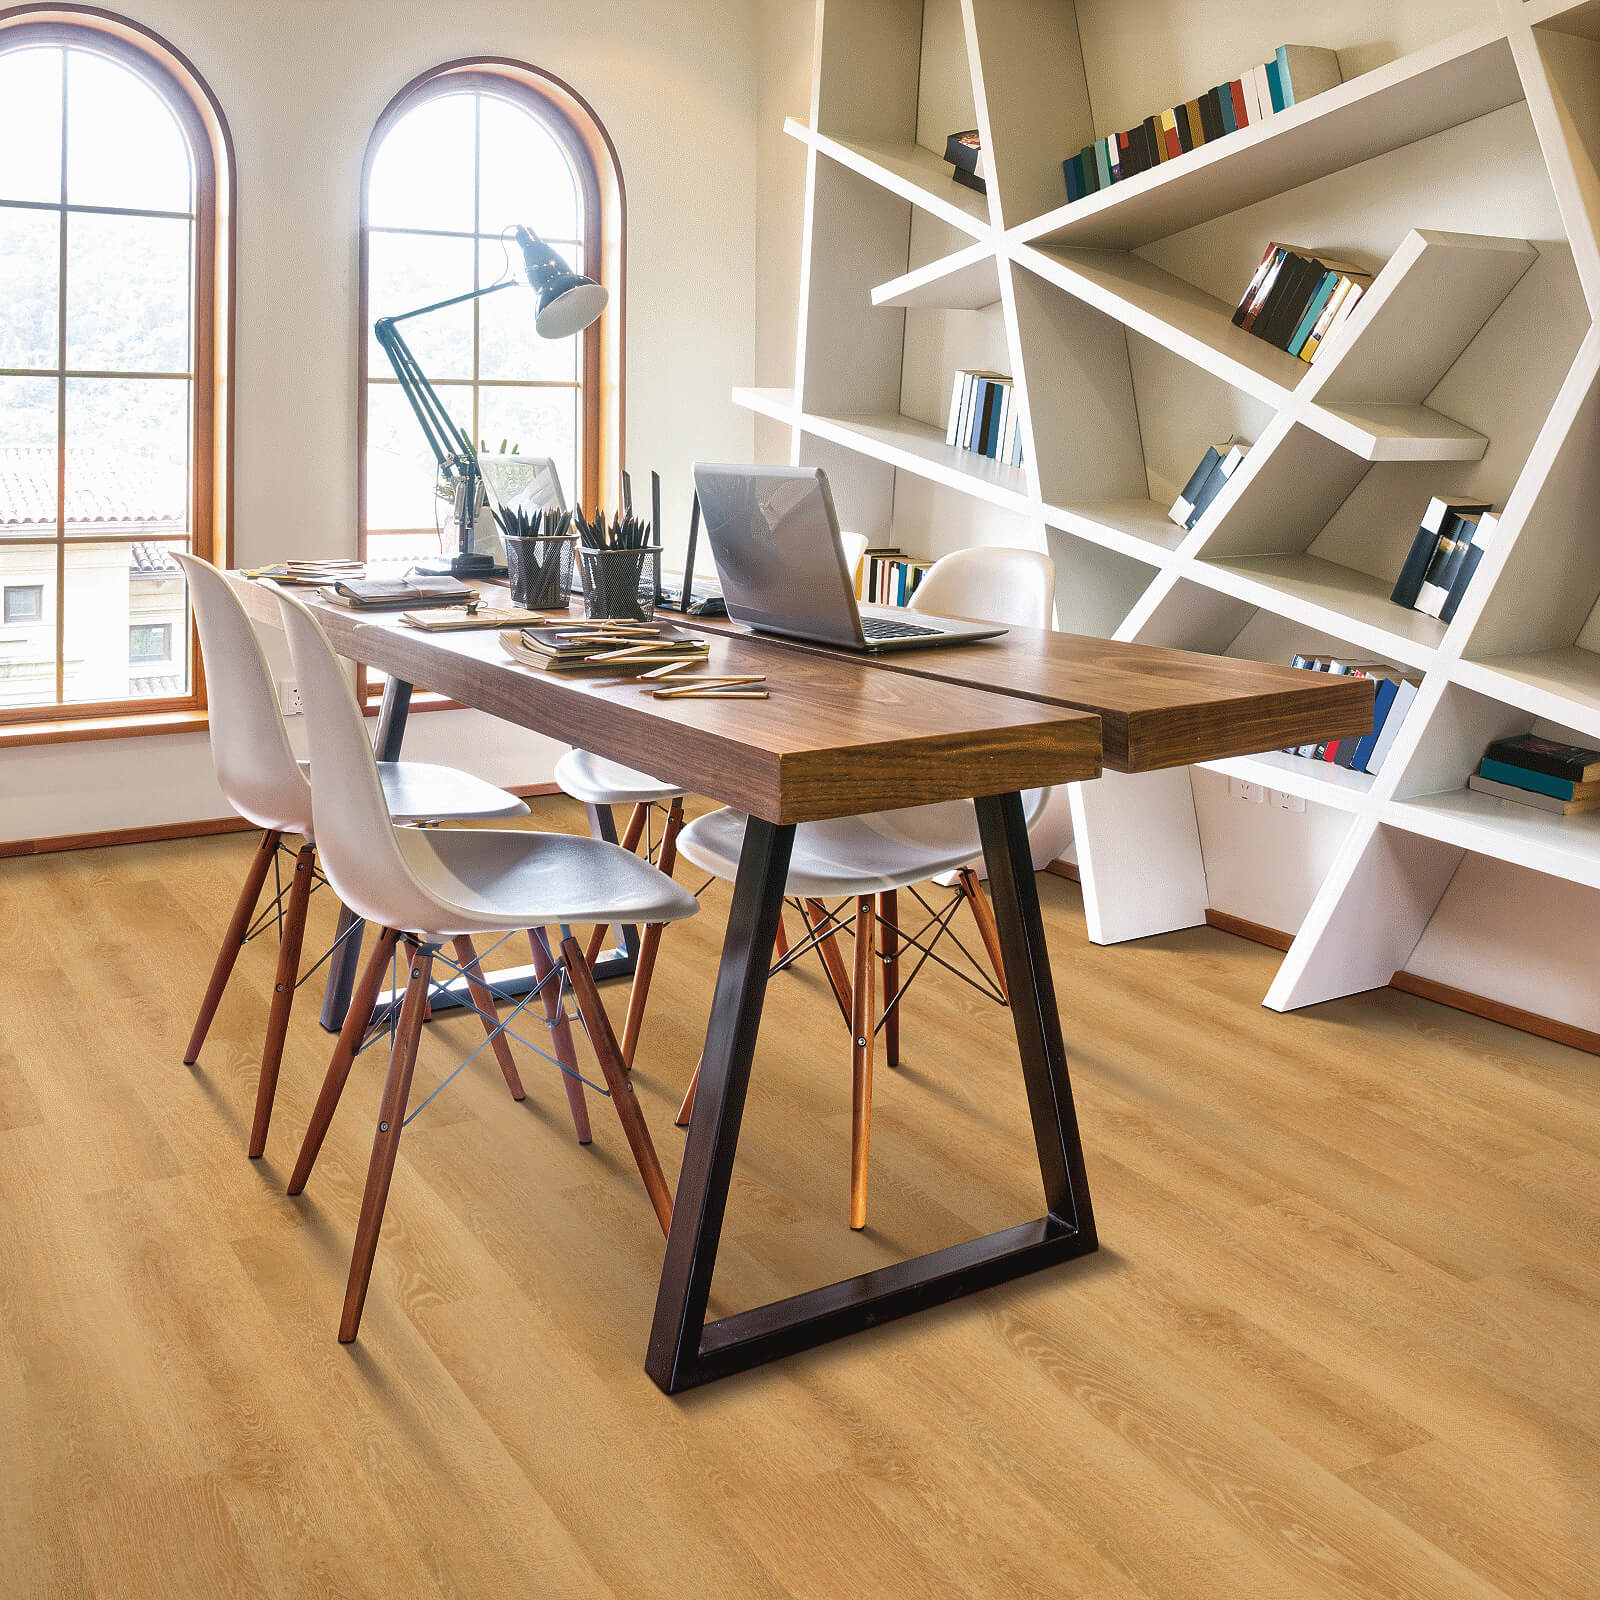 Vinyl flooring for study room | Rocky Mountain Flooring